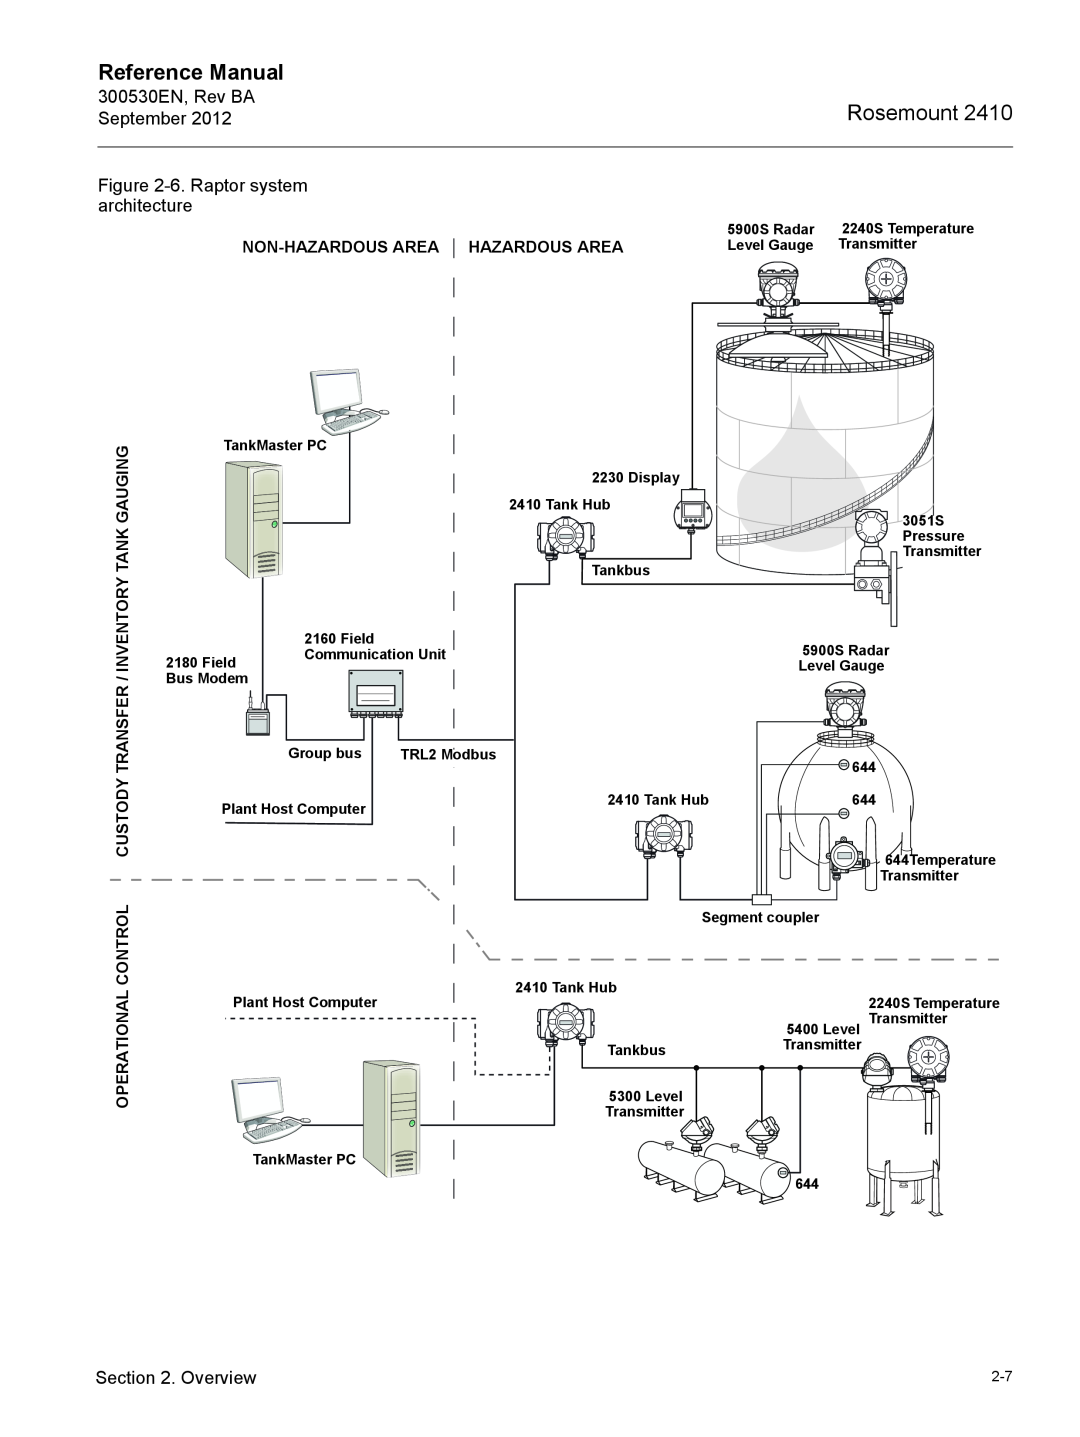 Emerson Process Management Rosemount 2410 manual Reference Manual, Non-Hazardous Area Hazardous Area, Control Custody 